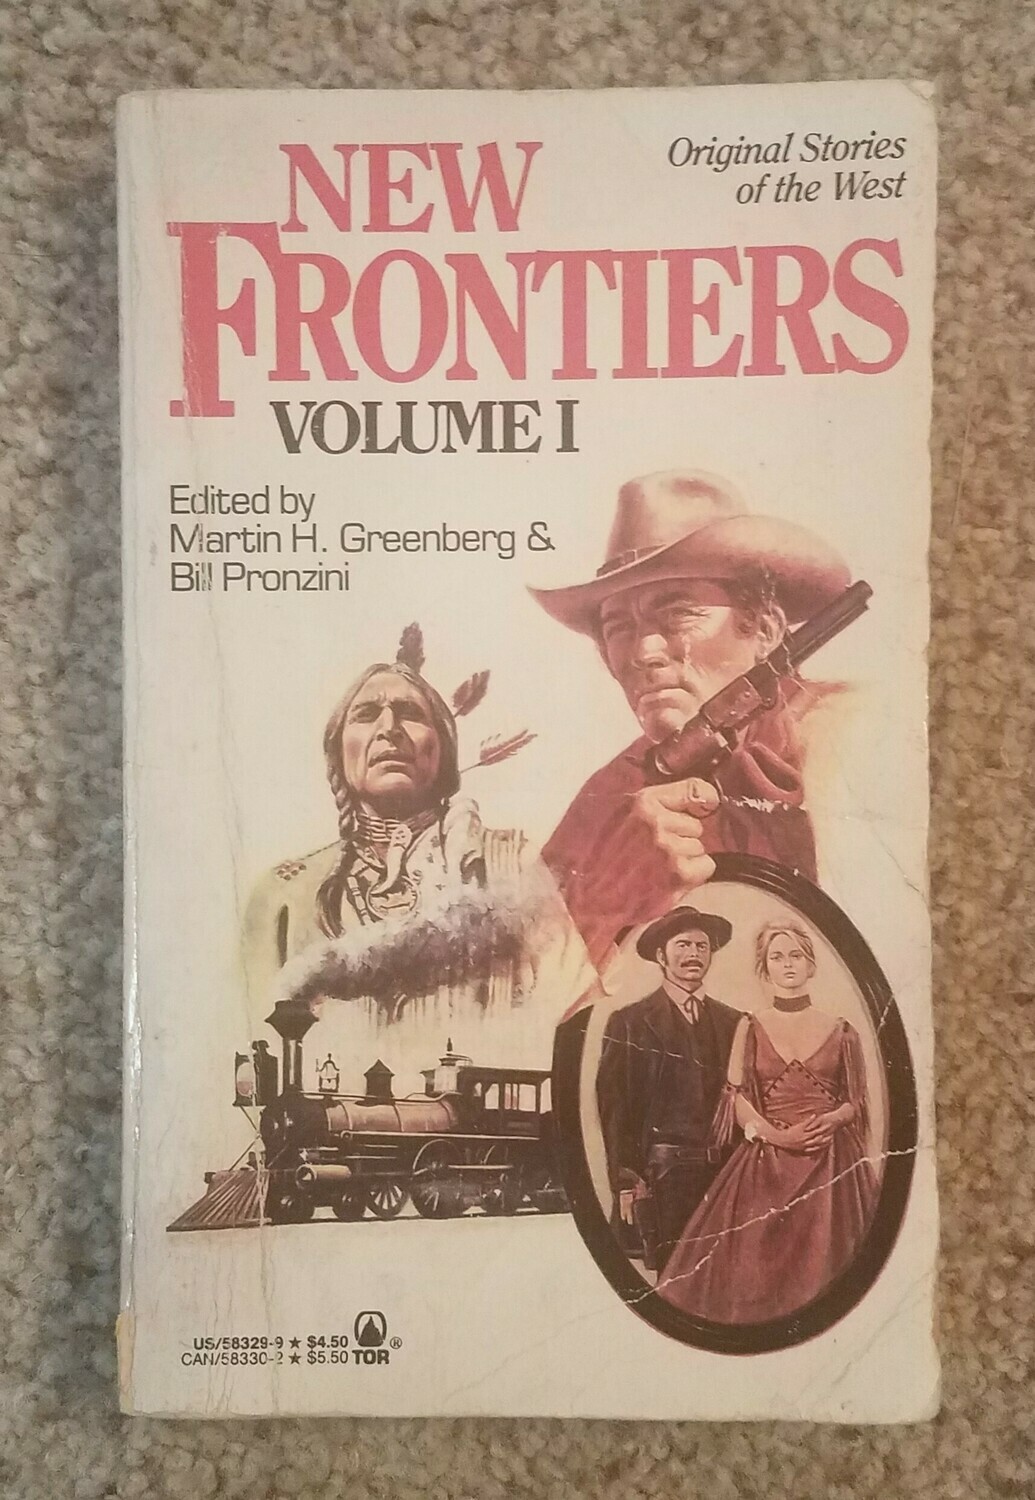 New Frontiers: Volume 1 by Martin H. Greenberg and Bill Pronziri